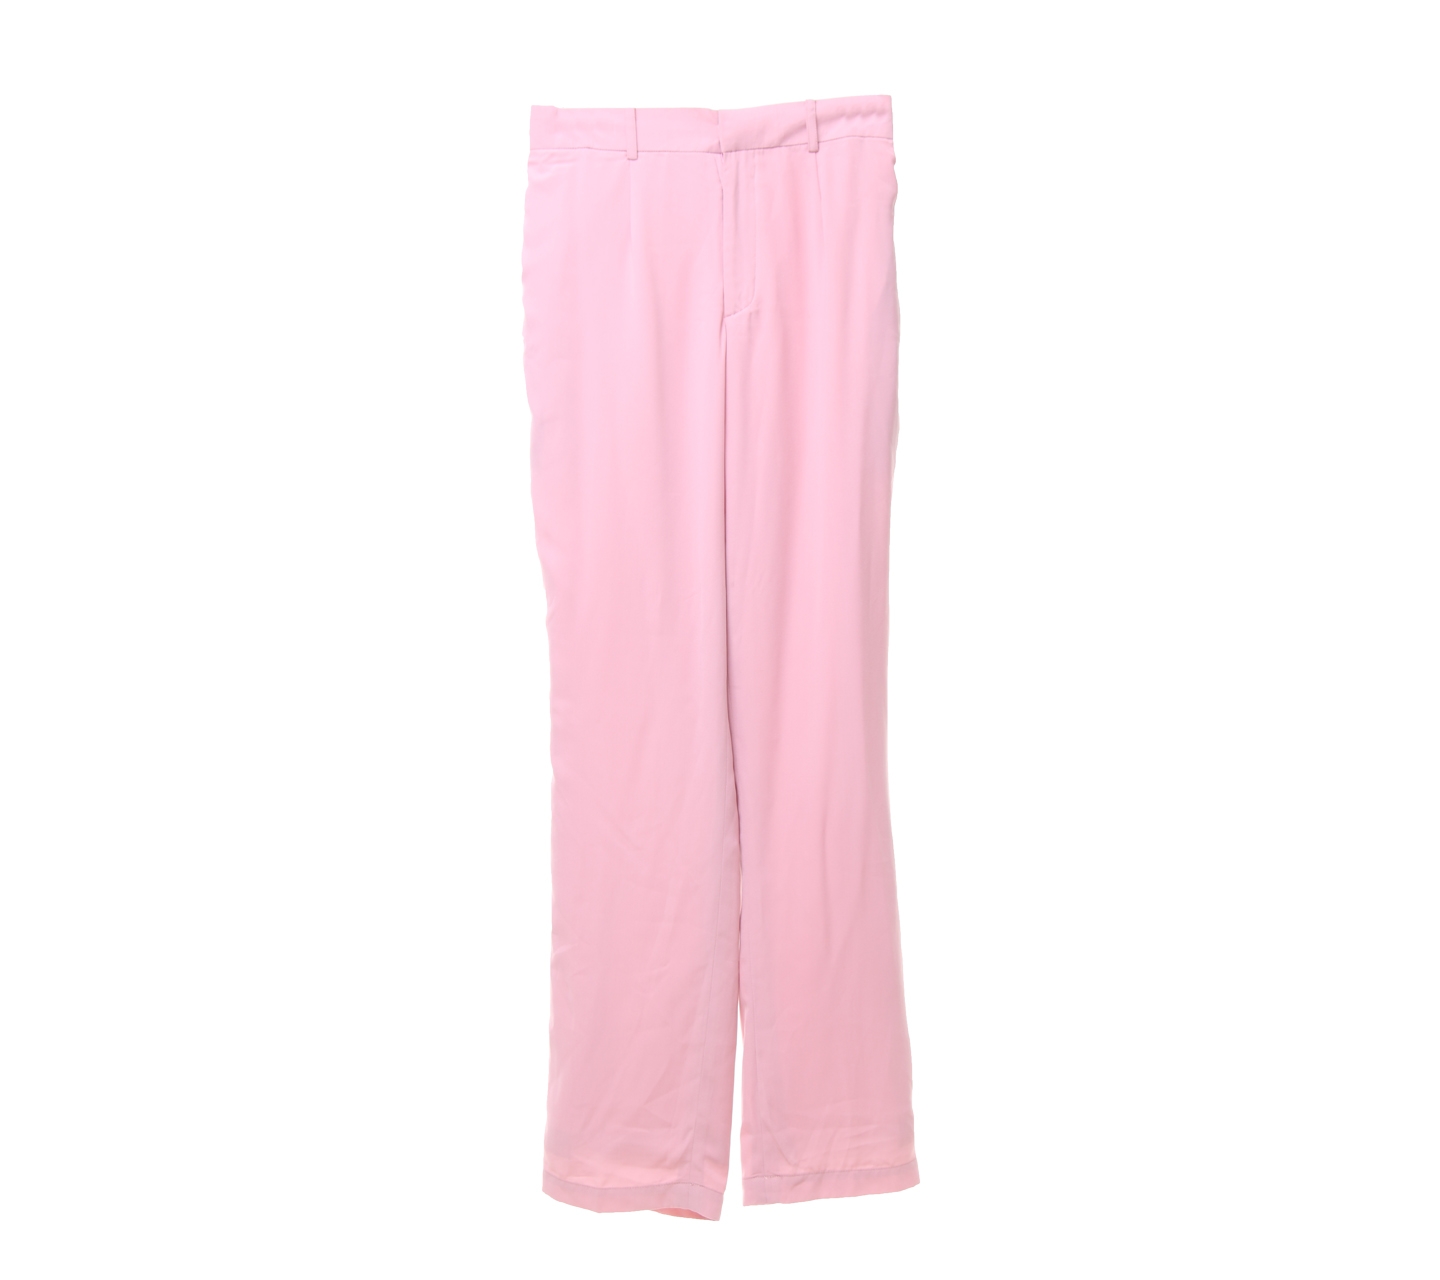 ATS The Label Pink Long Pants